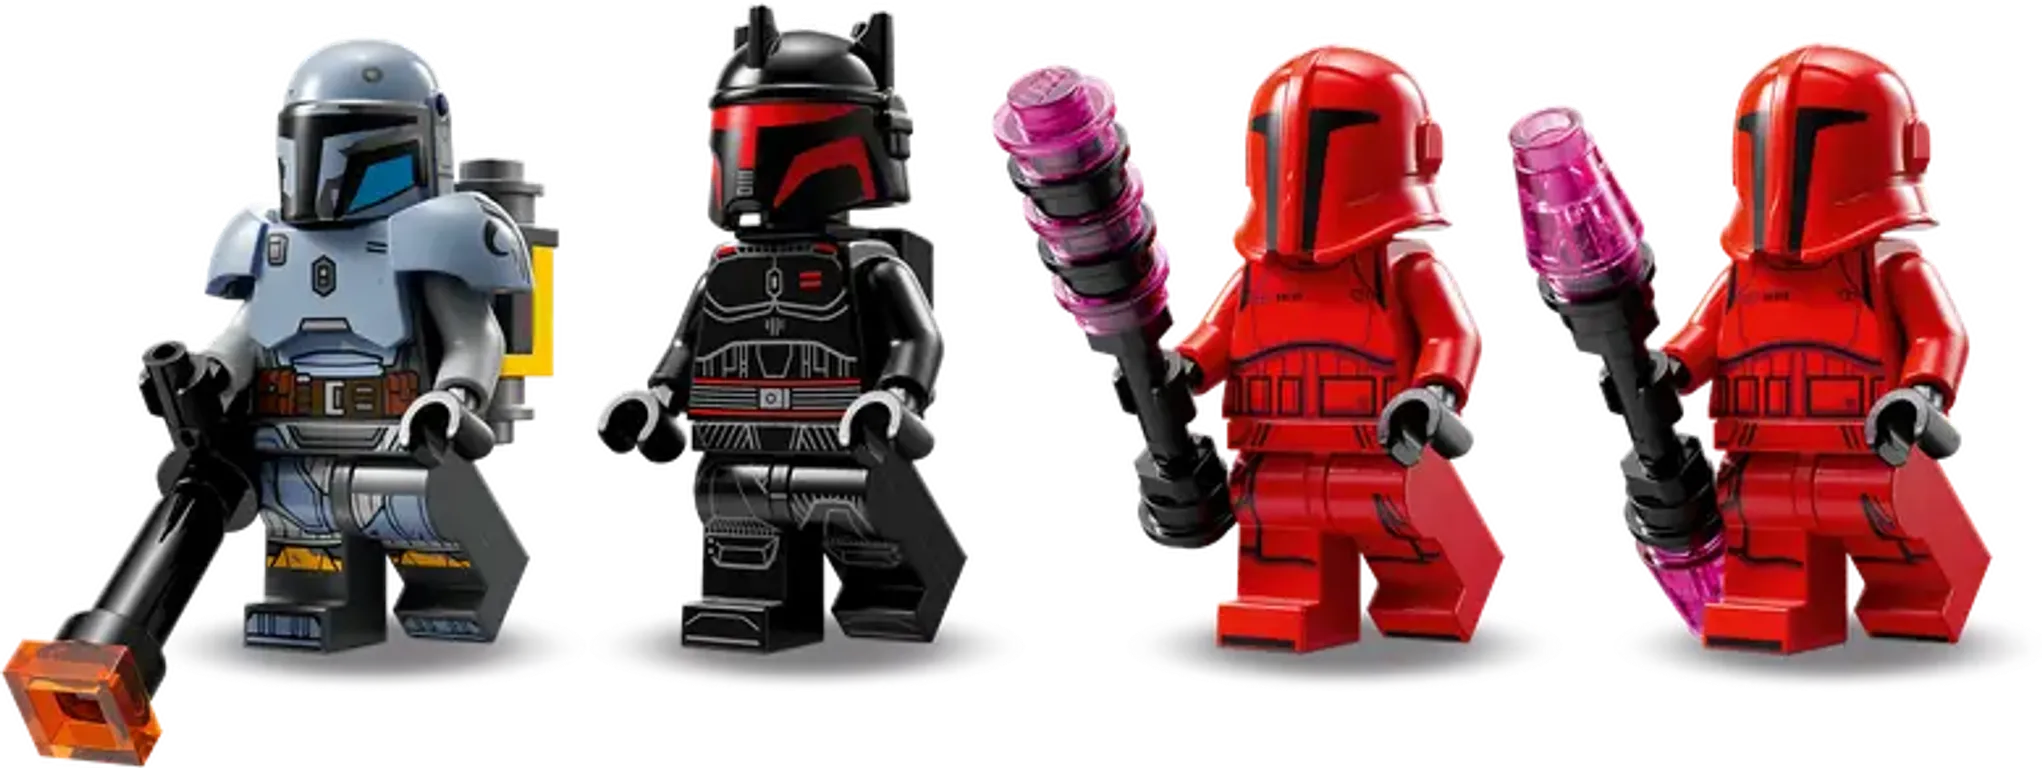 LEGO® Star Wars Paz Vizsla and Moff Gideon Battle minifigures